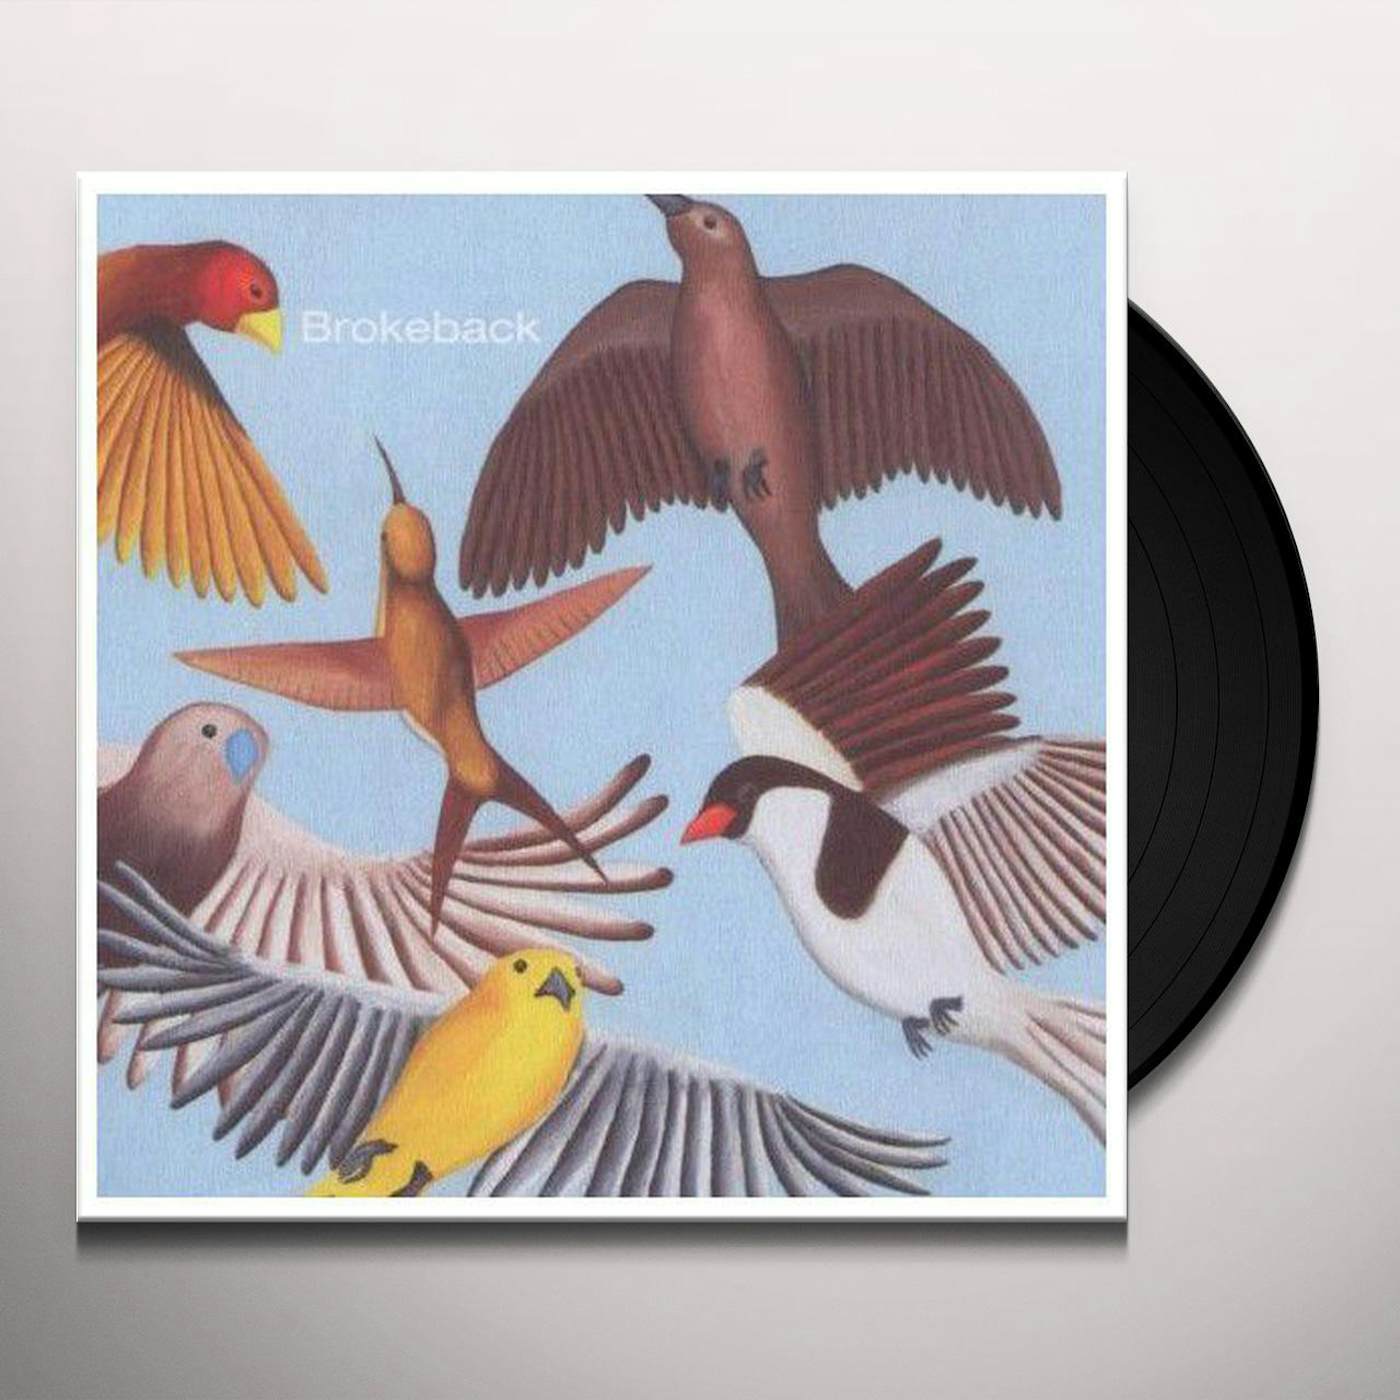 Brokeback Looks at the Bird Vinyl Record